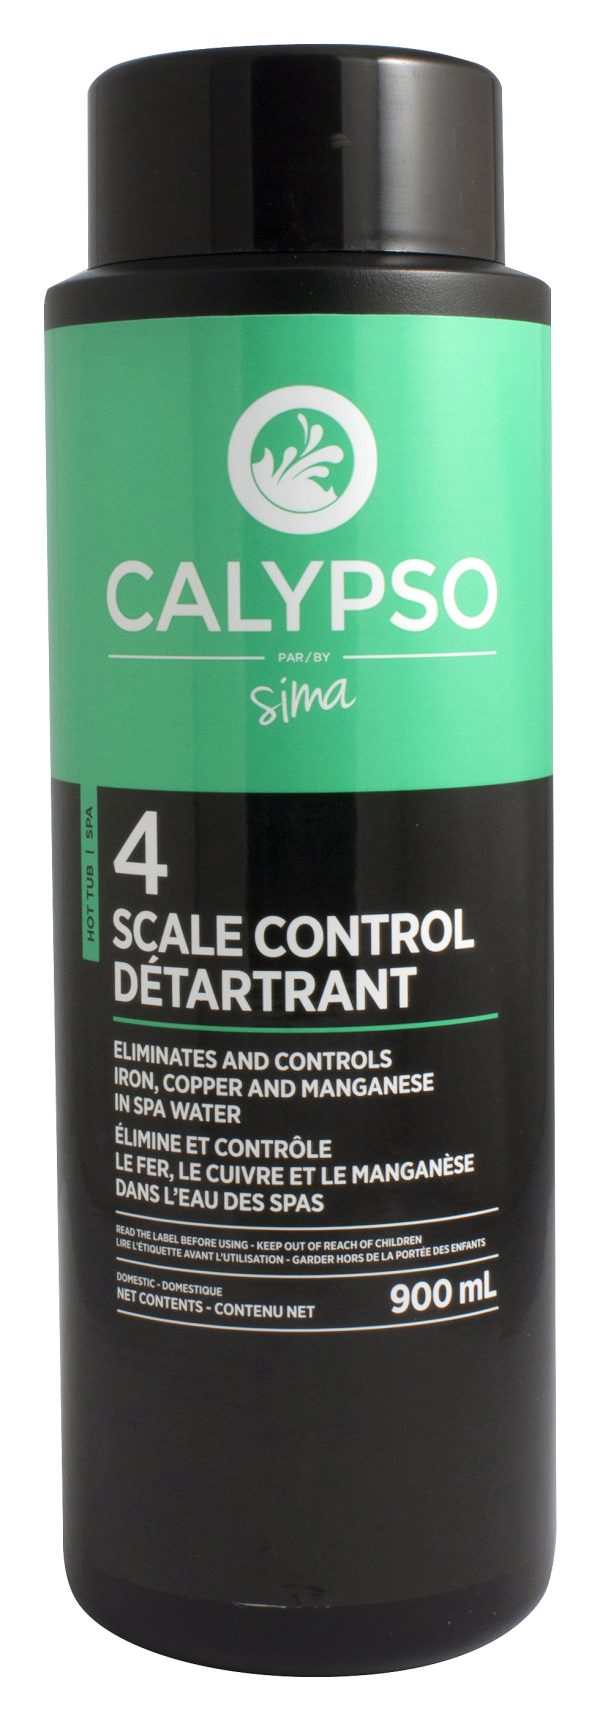 Calypso Détartrant #4 900ML - Produits de spa - Entretien de spa - Sima PISCINES & SPAS